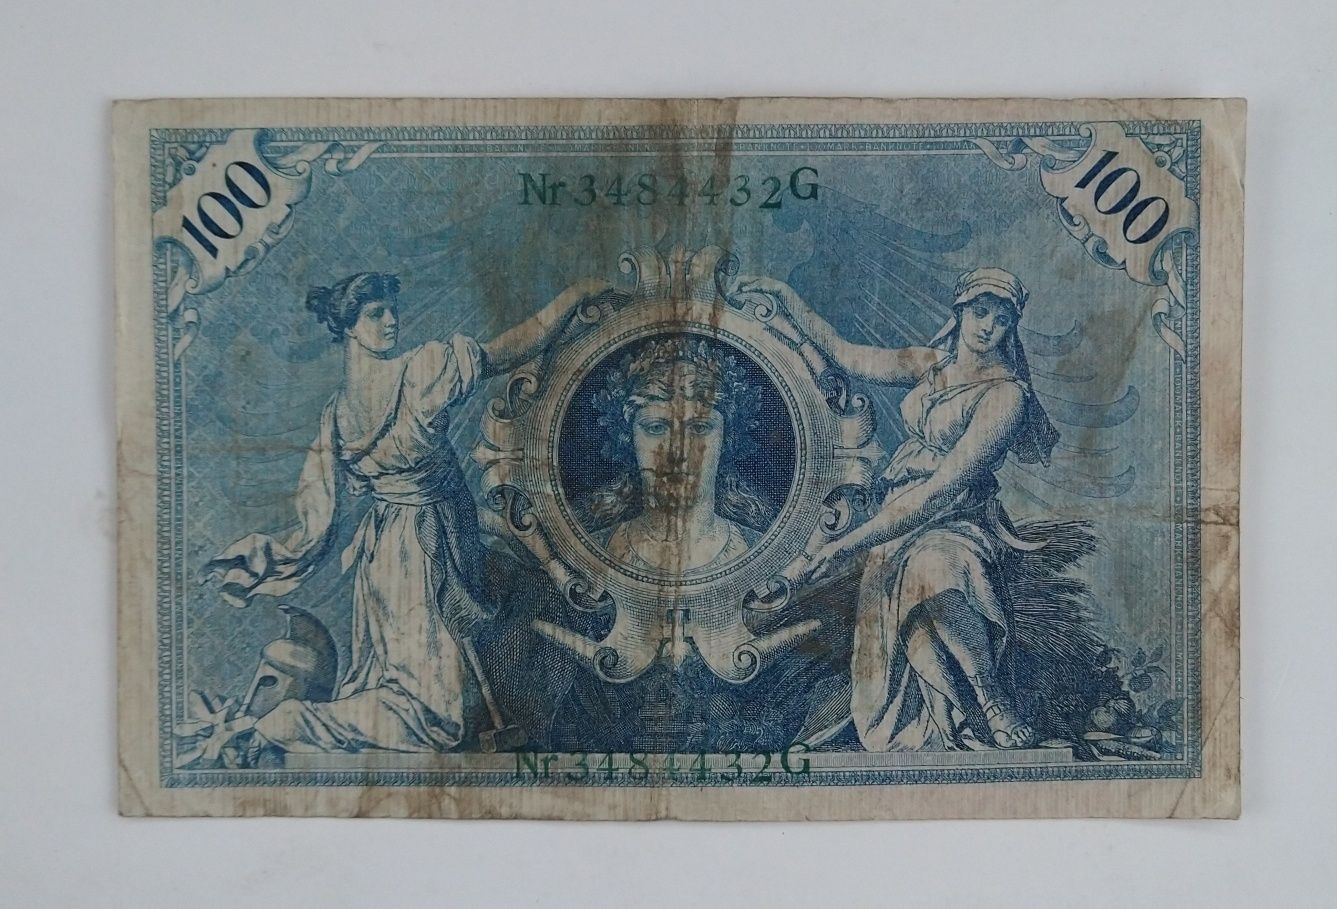 Banknot 100 marek niemieckich , 1908